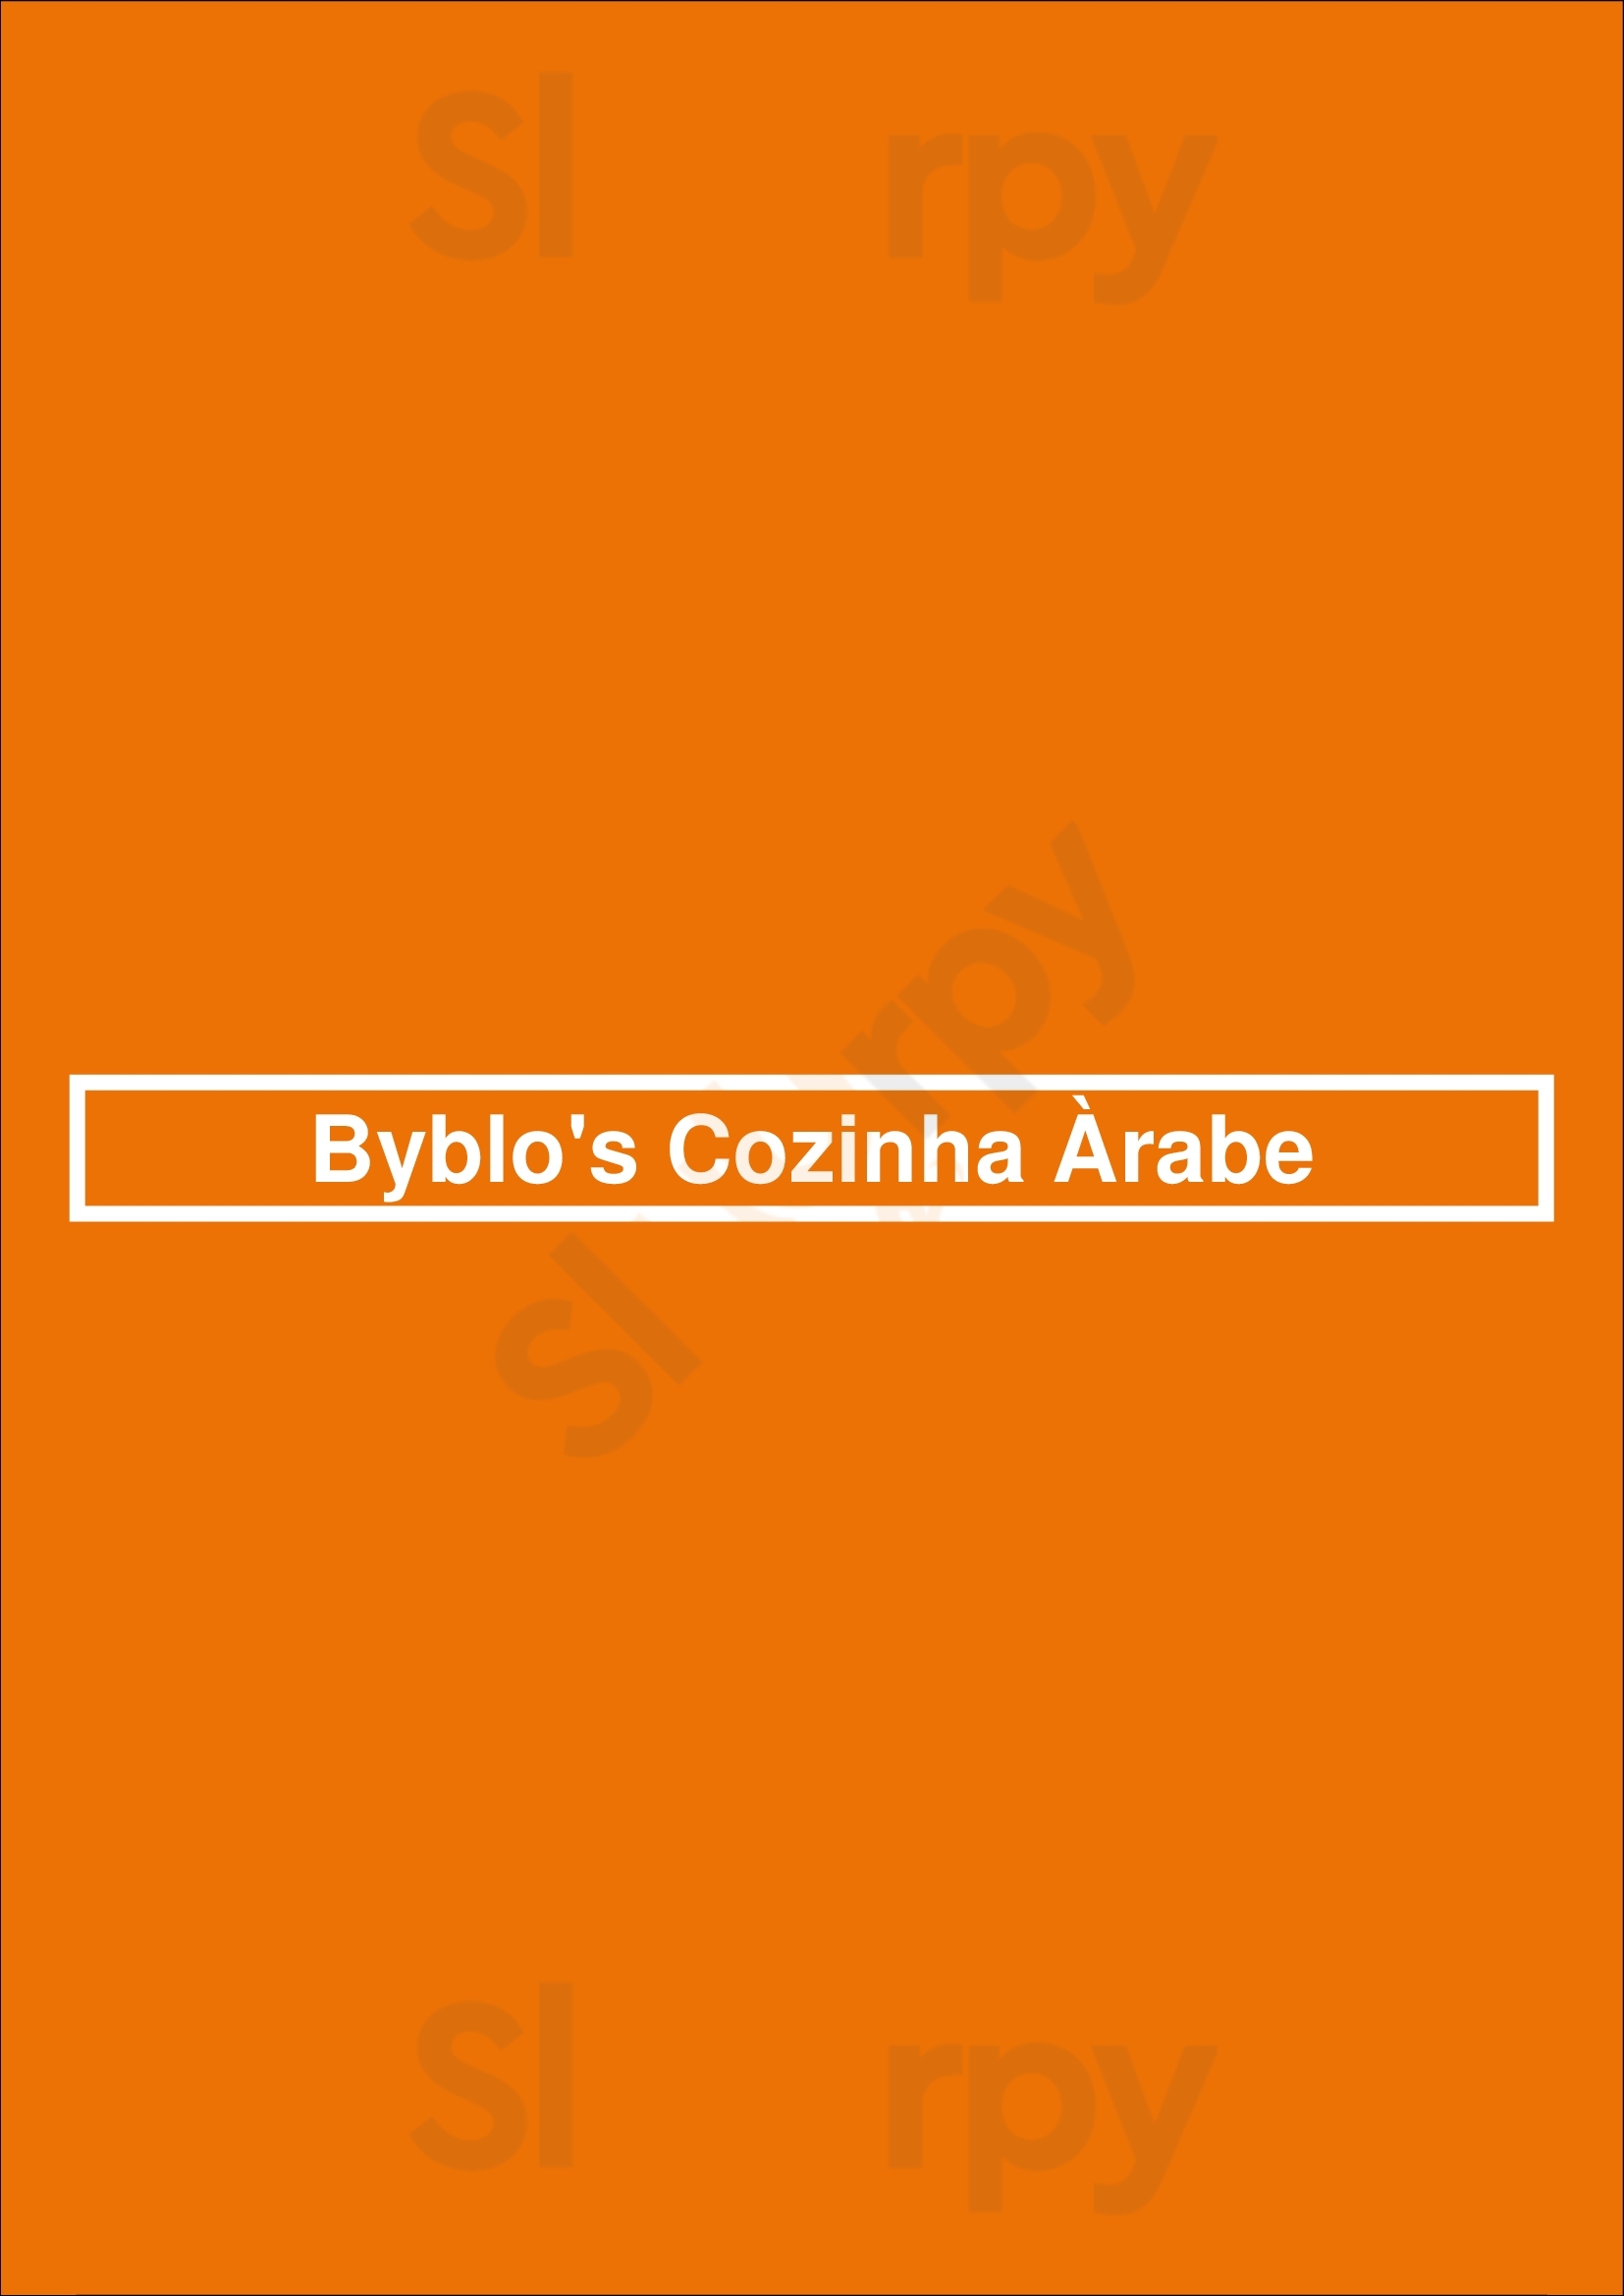 Byblo's Cozinha Àrabe São Paulo Menu - 1